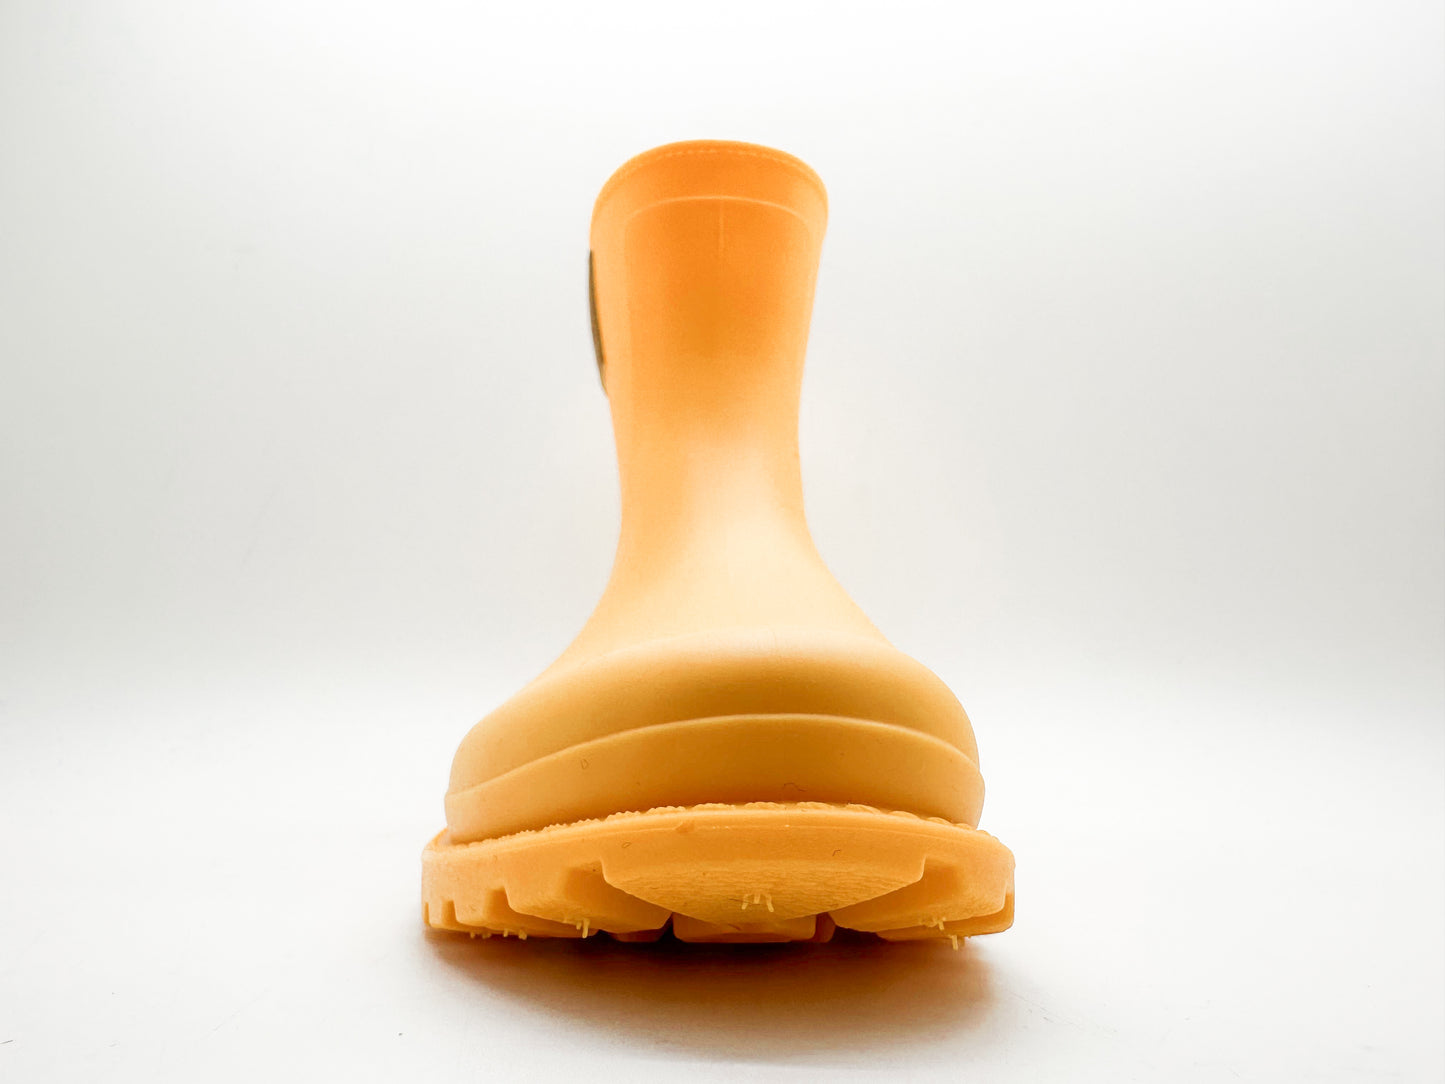 thies ® Bio Rainboot orange juice vegan (W) | 100% waterproof biodegradable rainboots